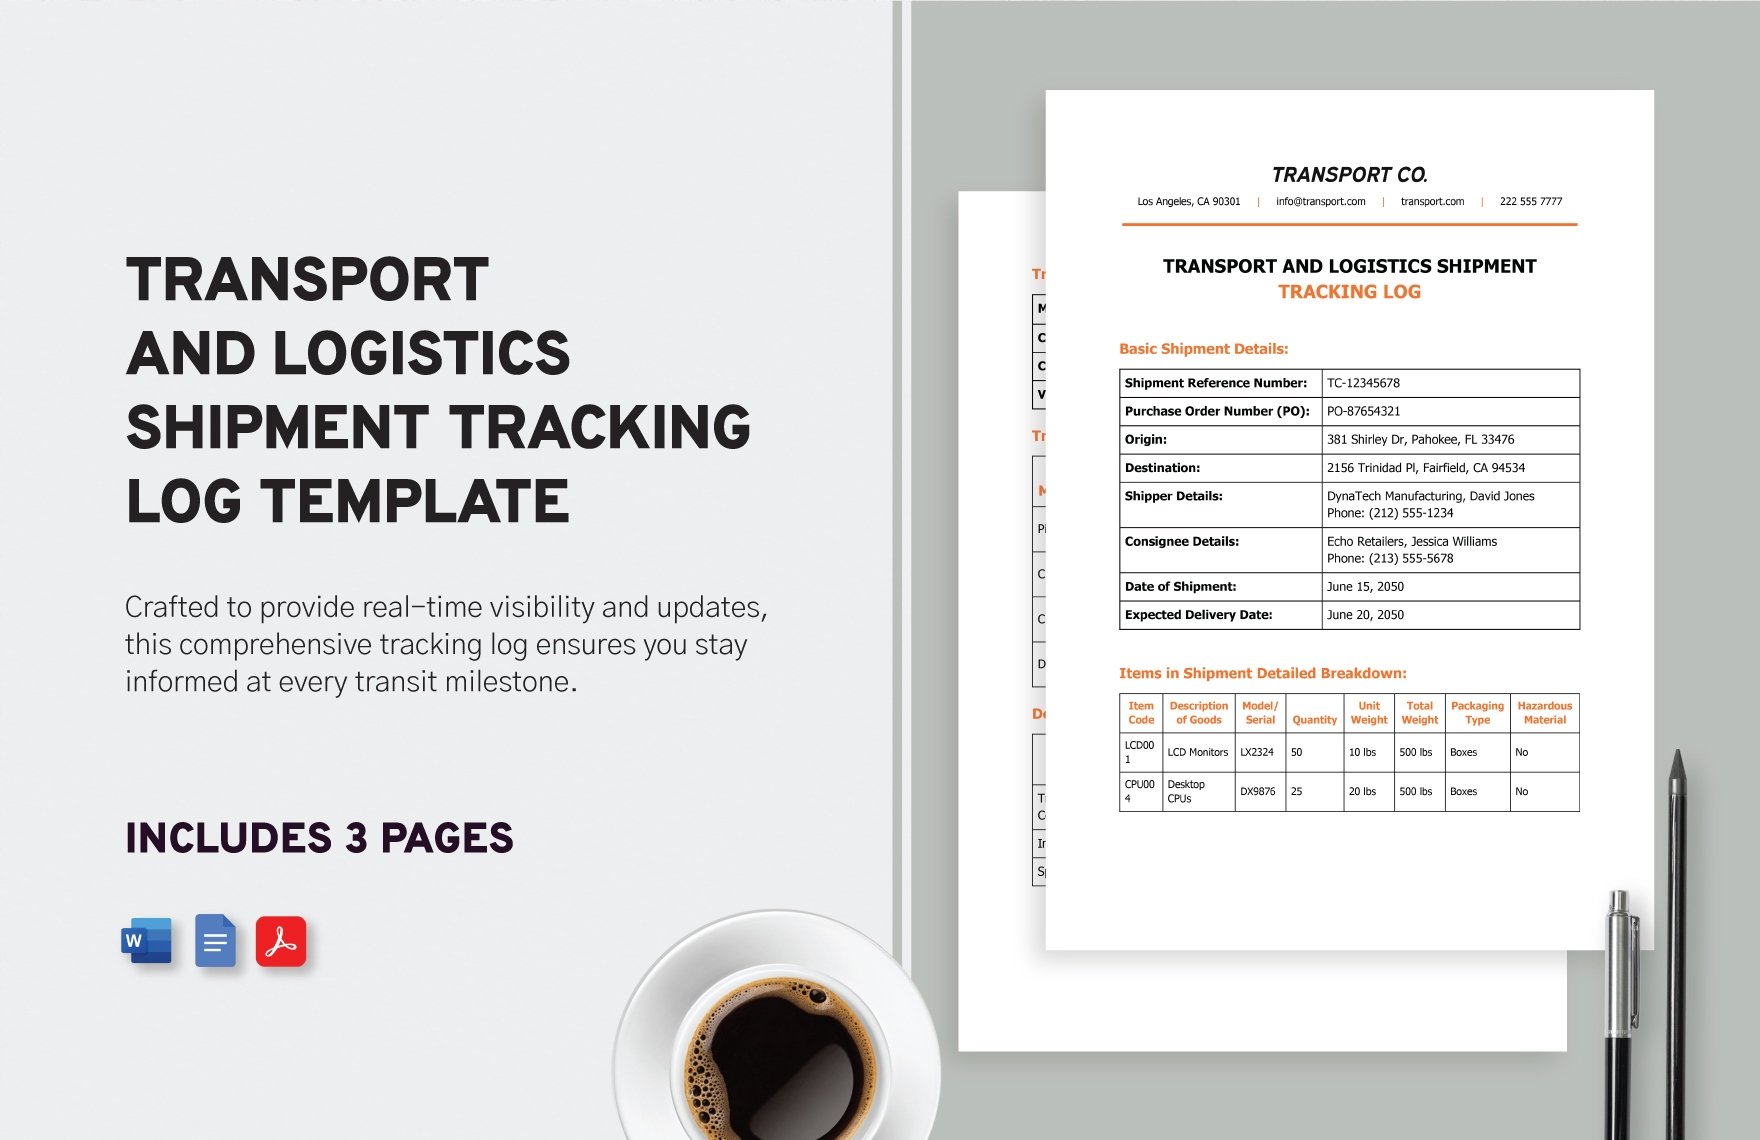 Transport and Logistics Shipment Tracking Log Template